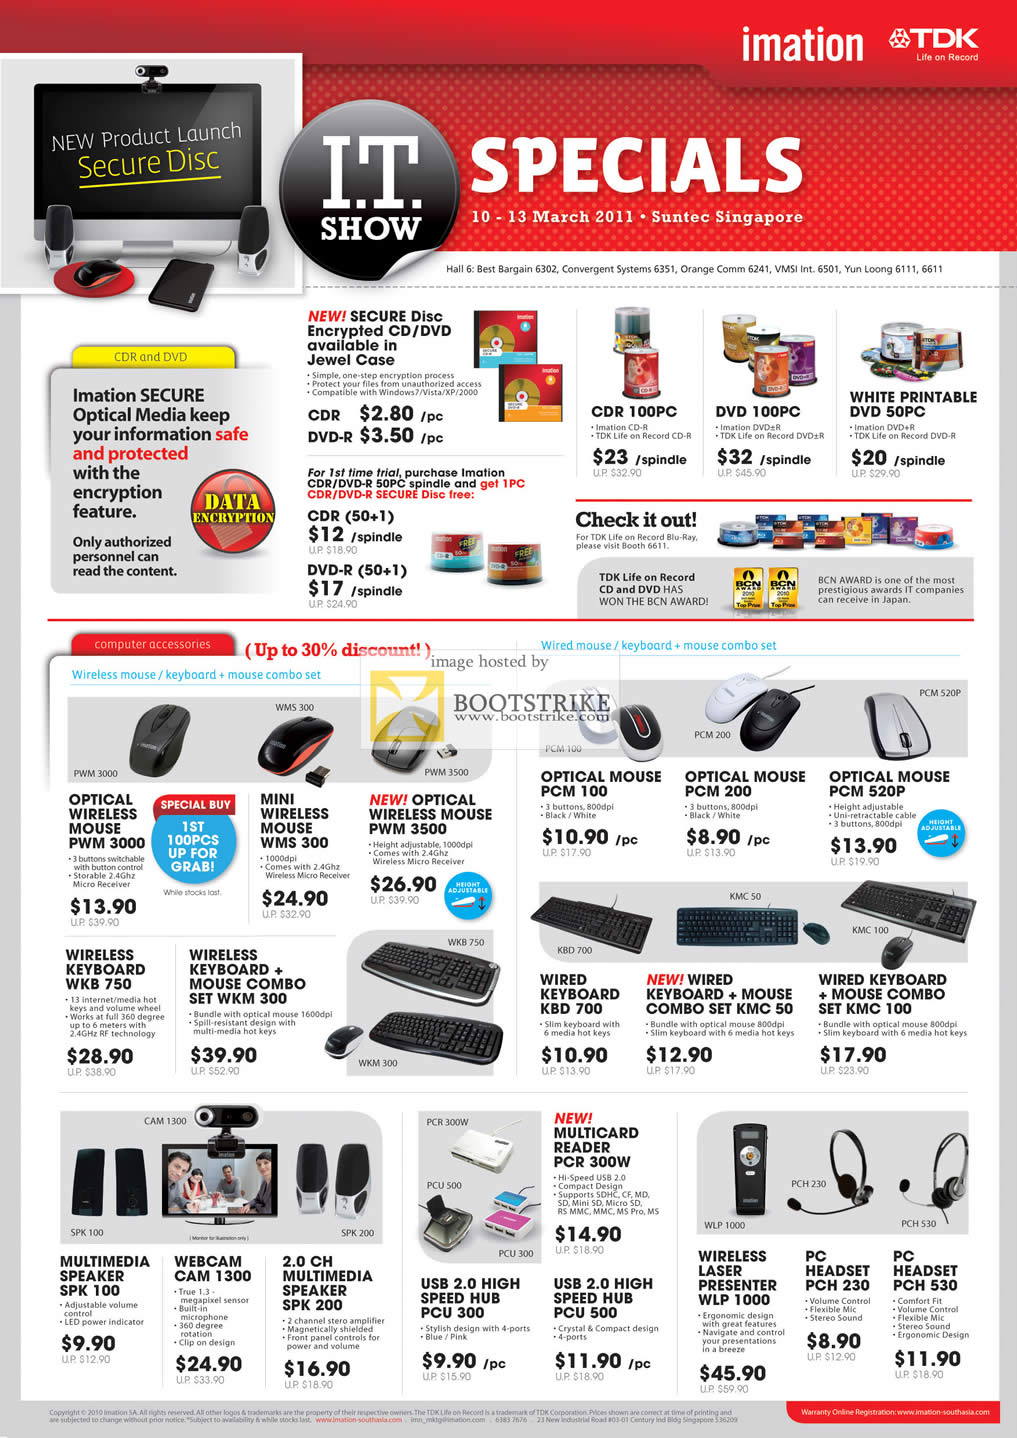 IT Show 2011 price list image brochure of Imation TDK External Storage CDR DVDR Wireless Mouse Keyboard Webcam 1300 Headset Presenter USB Hub